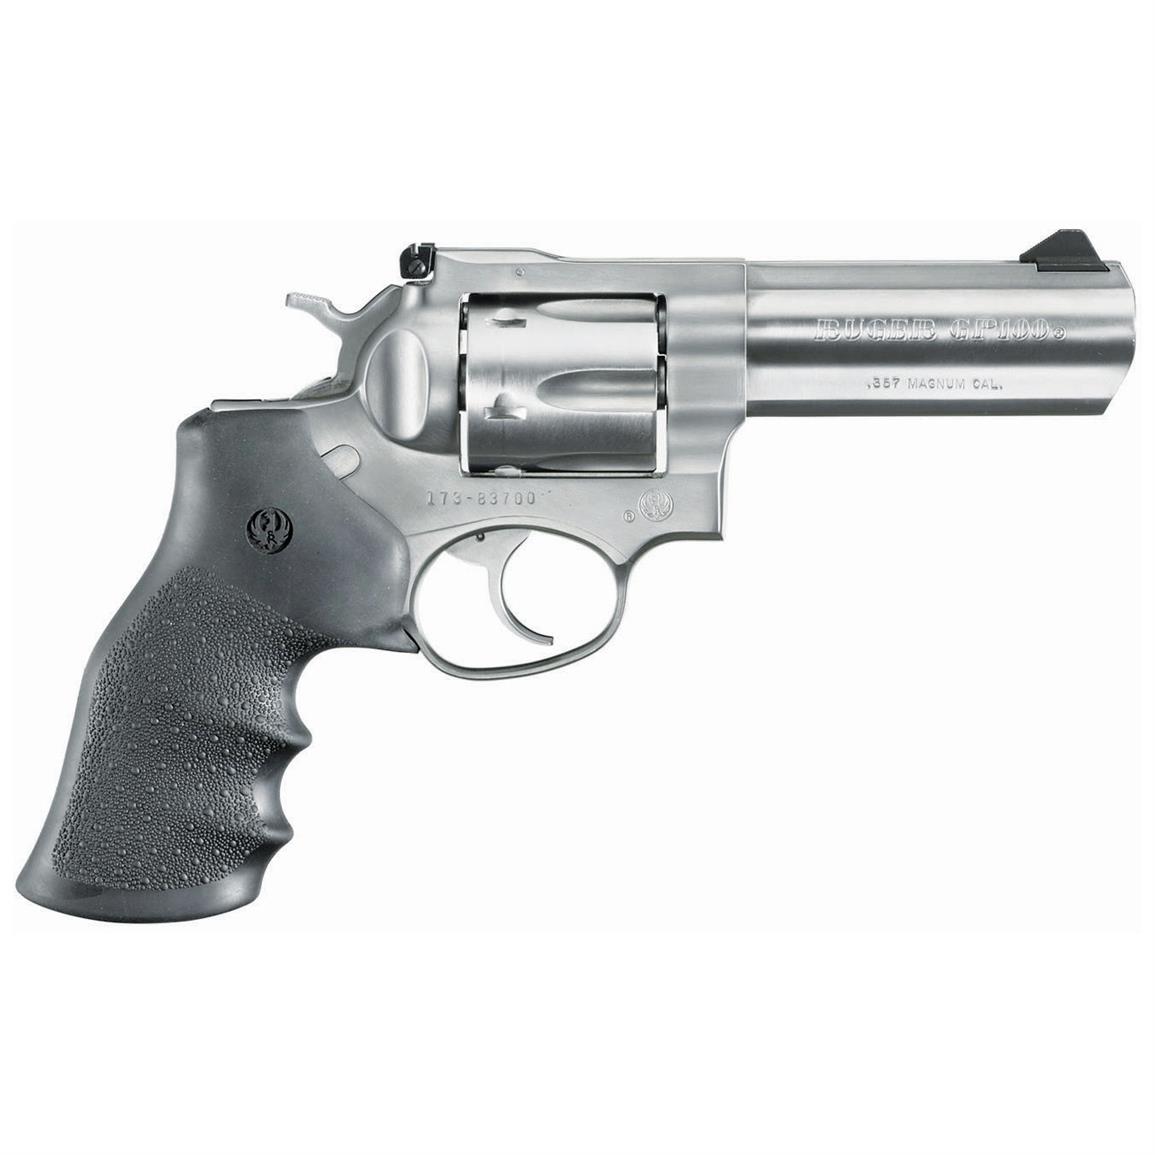 Ruger GP100, Double Action Revolver, .357 Magnum, 4.2" Barrel, 6 Rounds